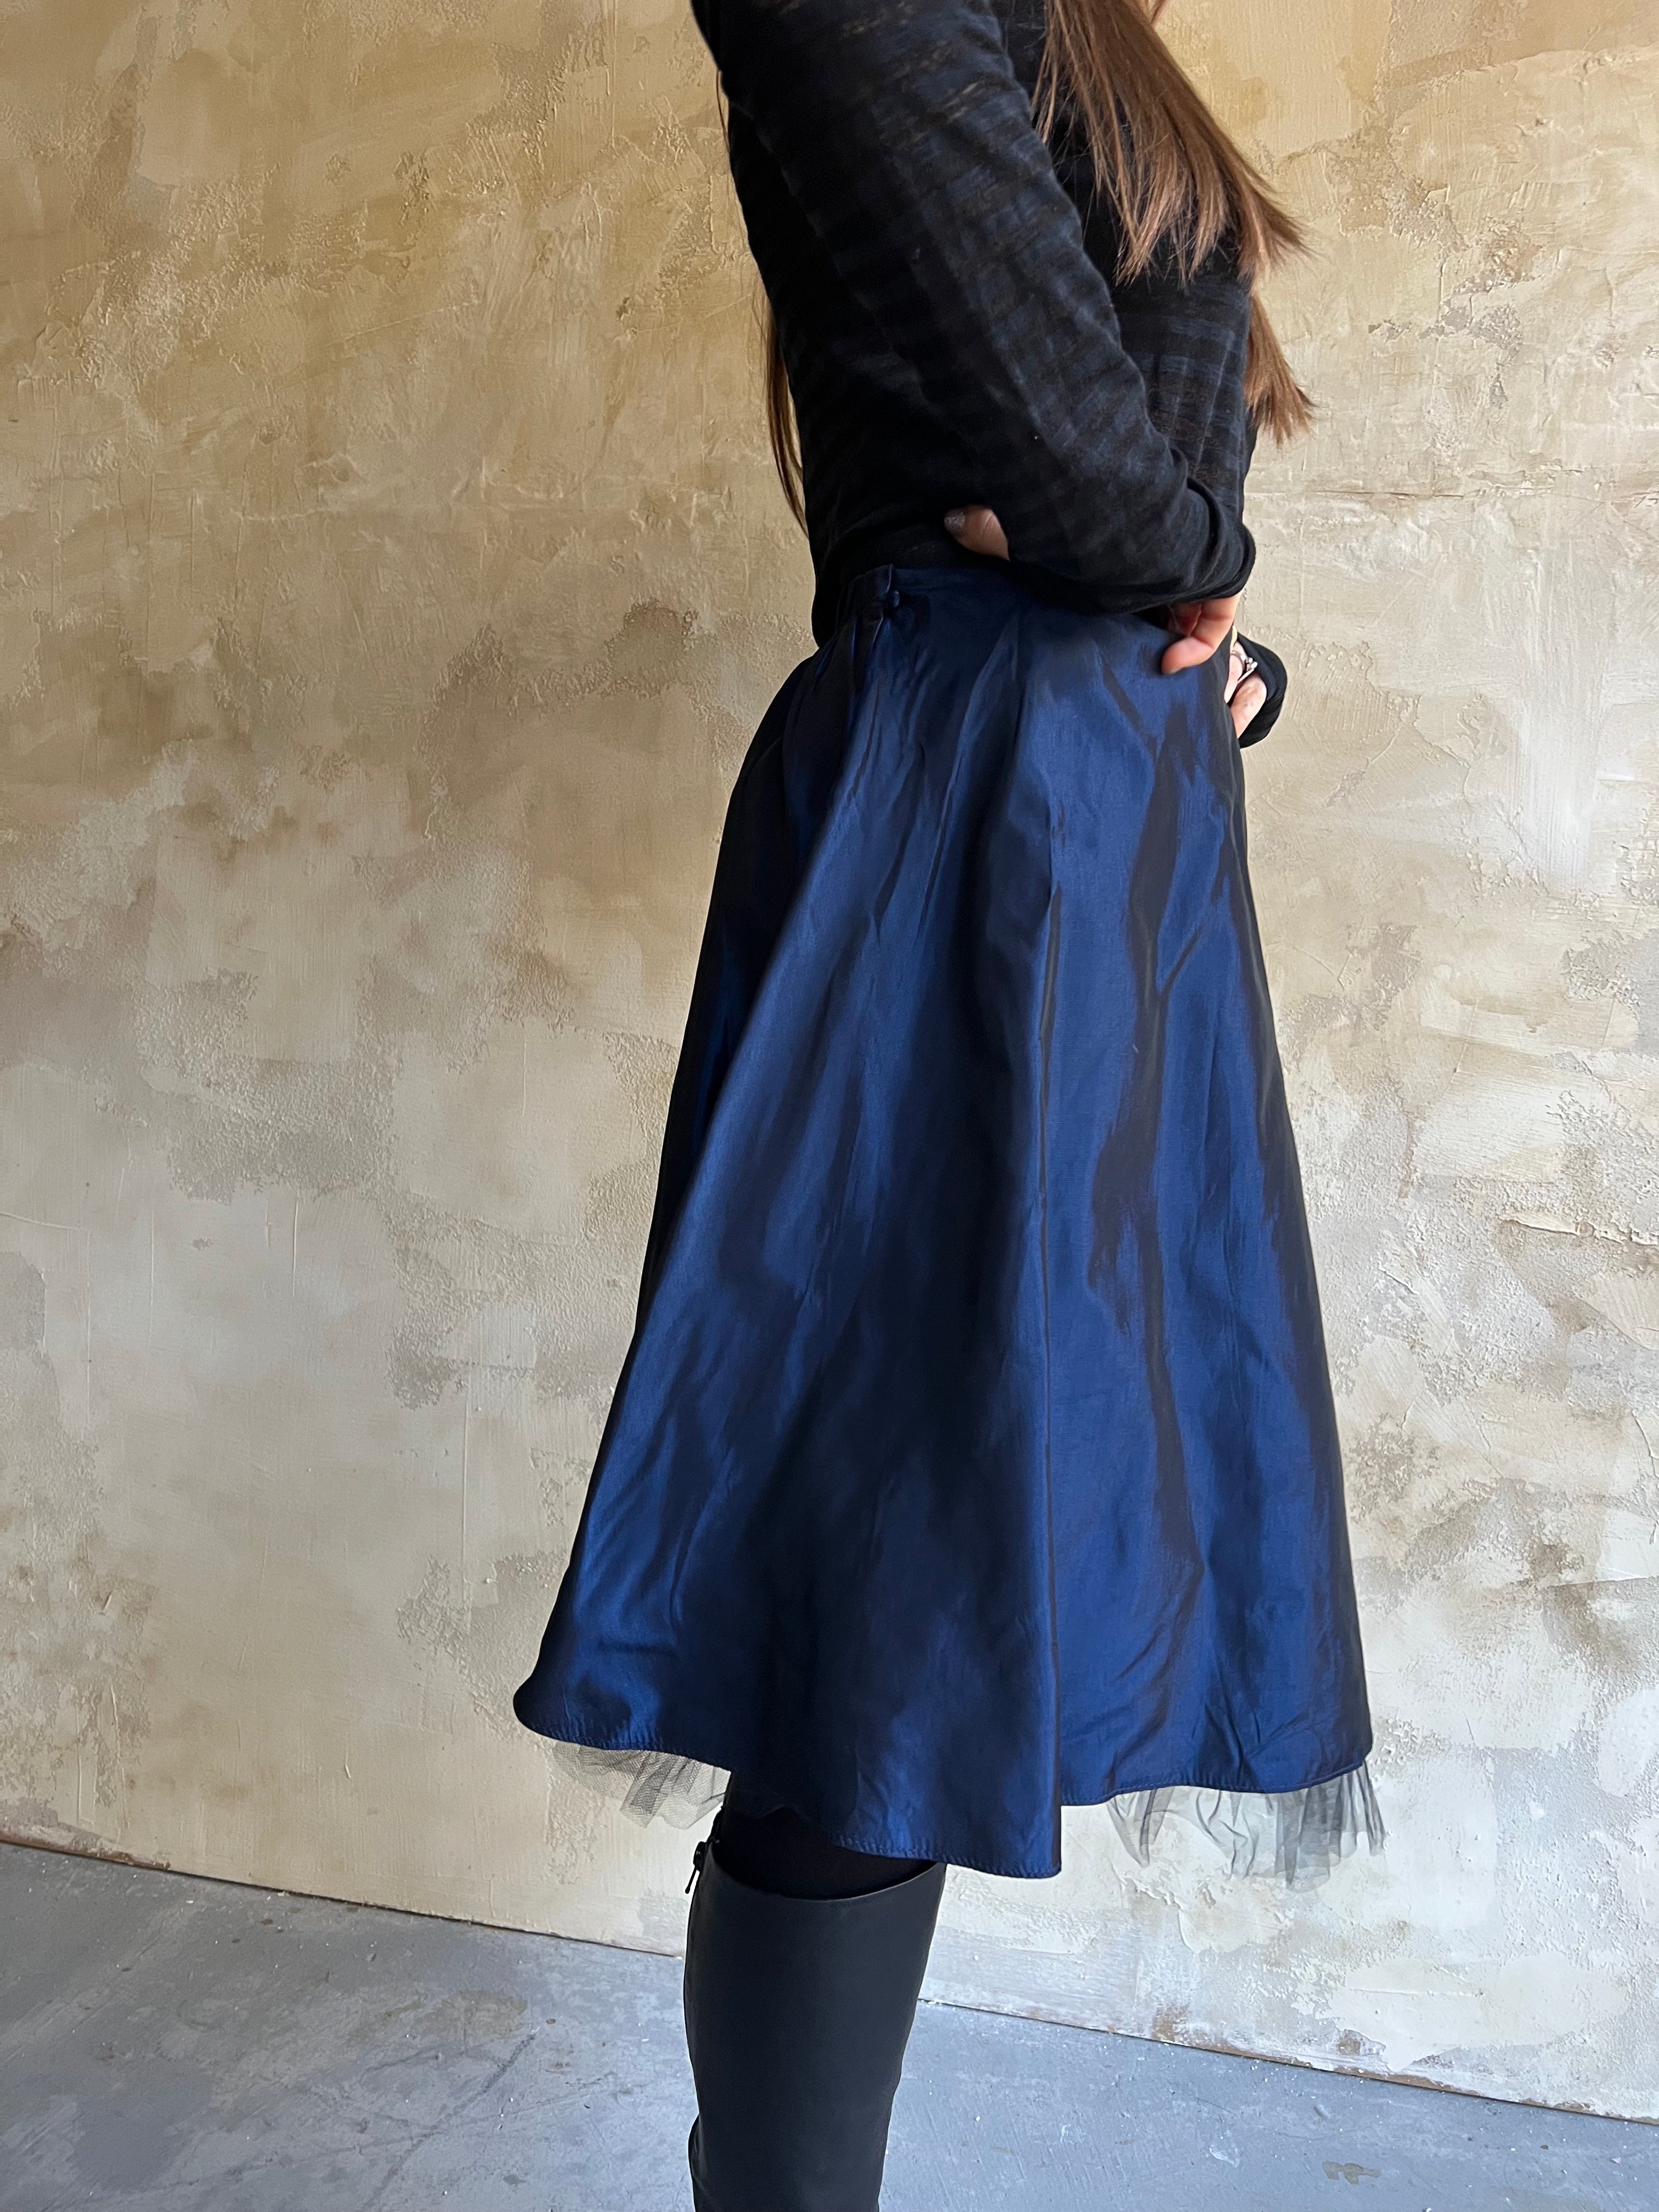 Blue Taffeta Skirt